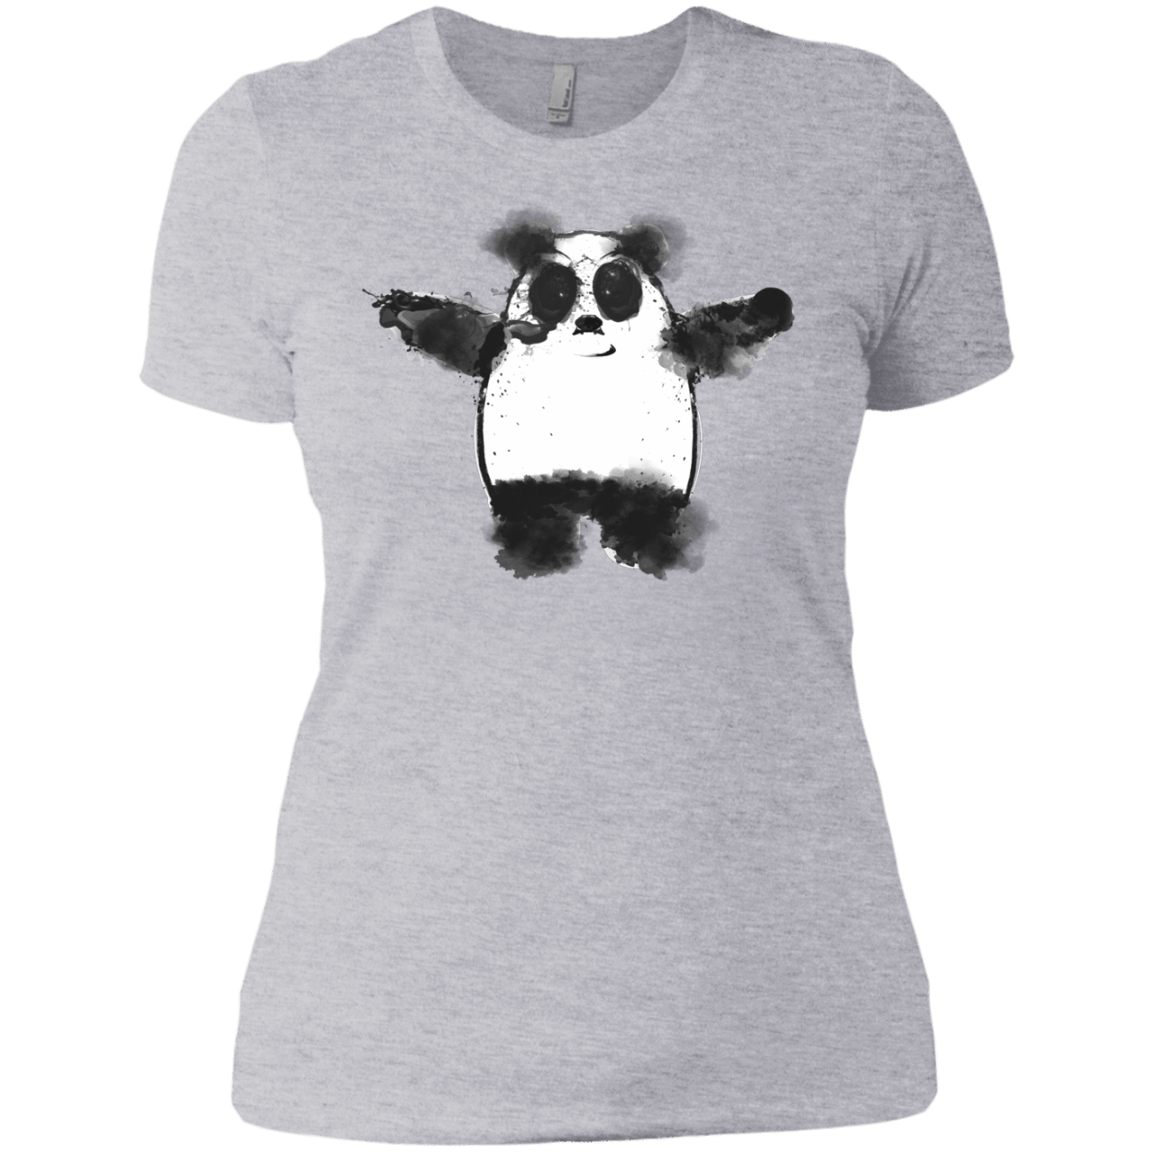 T-Shirts Heather Grey / X-Small Panda Ink Women's Premium T-Shirt